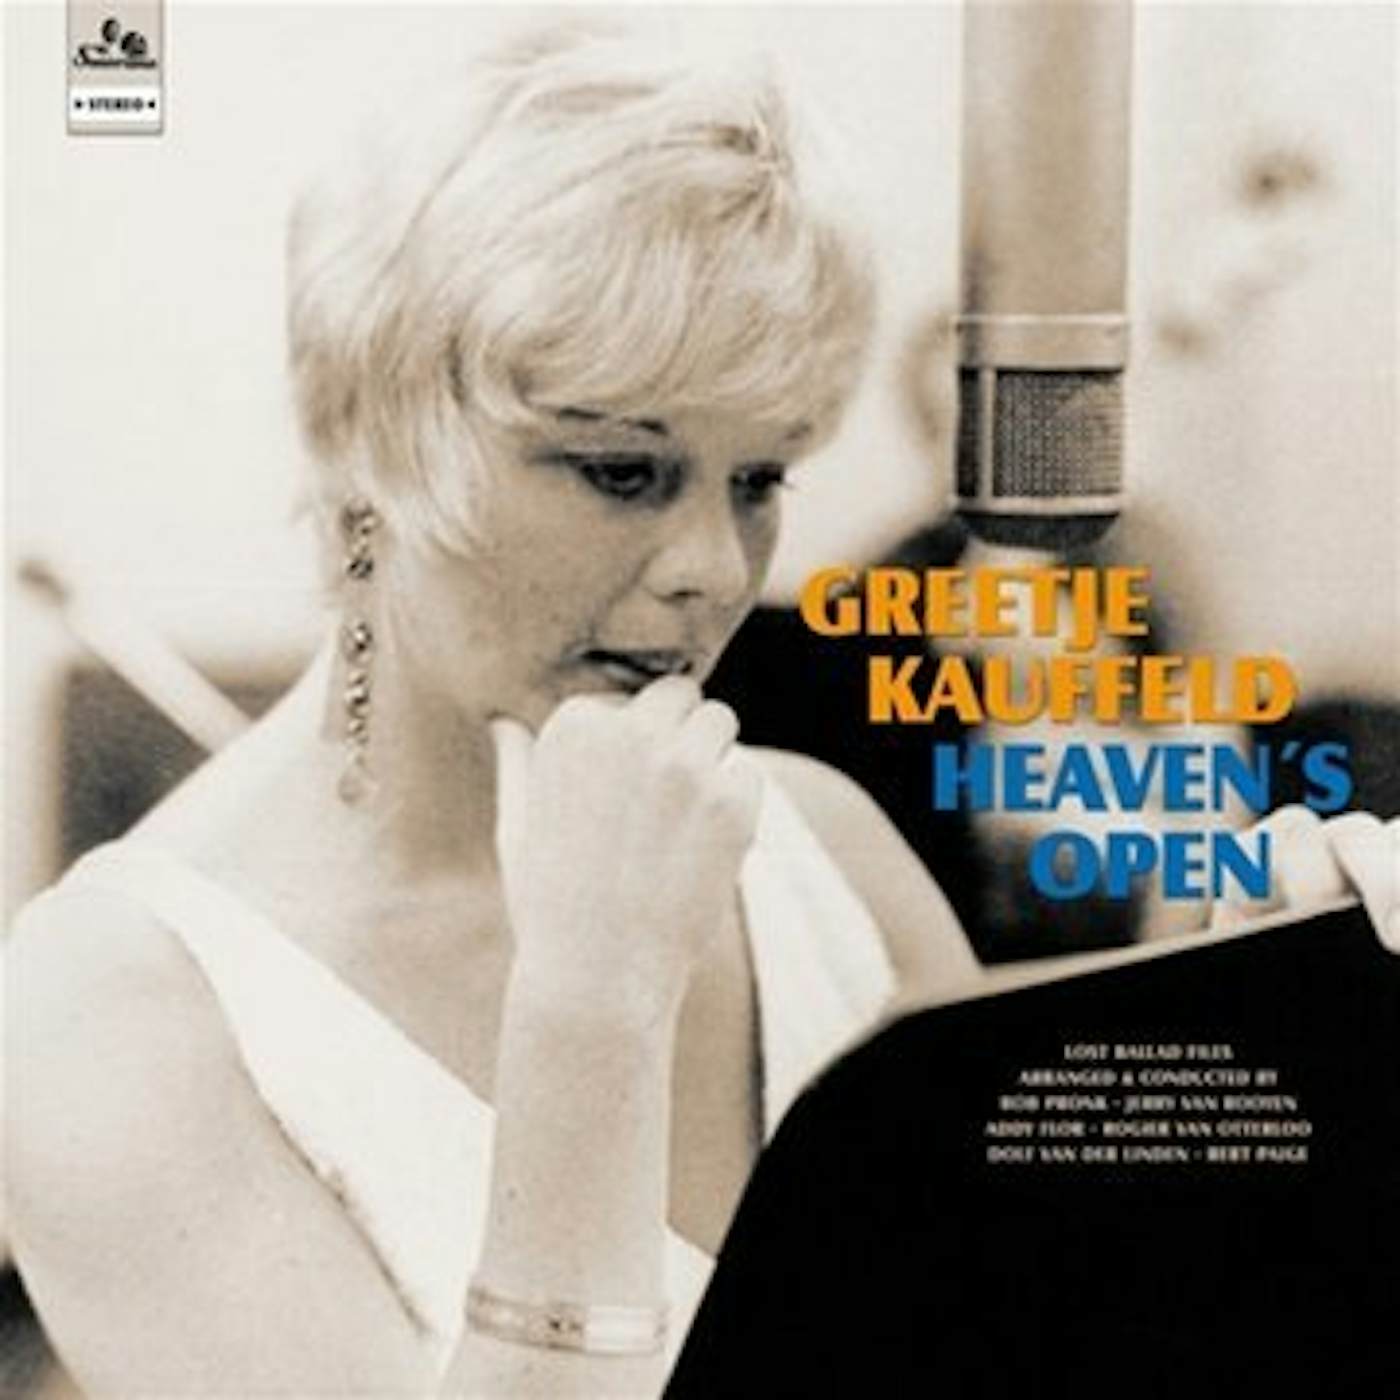 Greetje Kauffeld Heaven's Open Vinyl Record